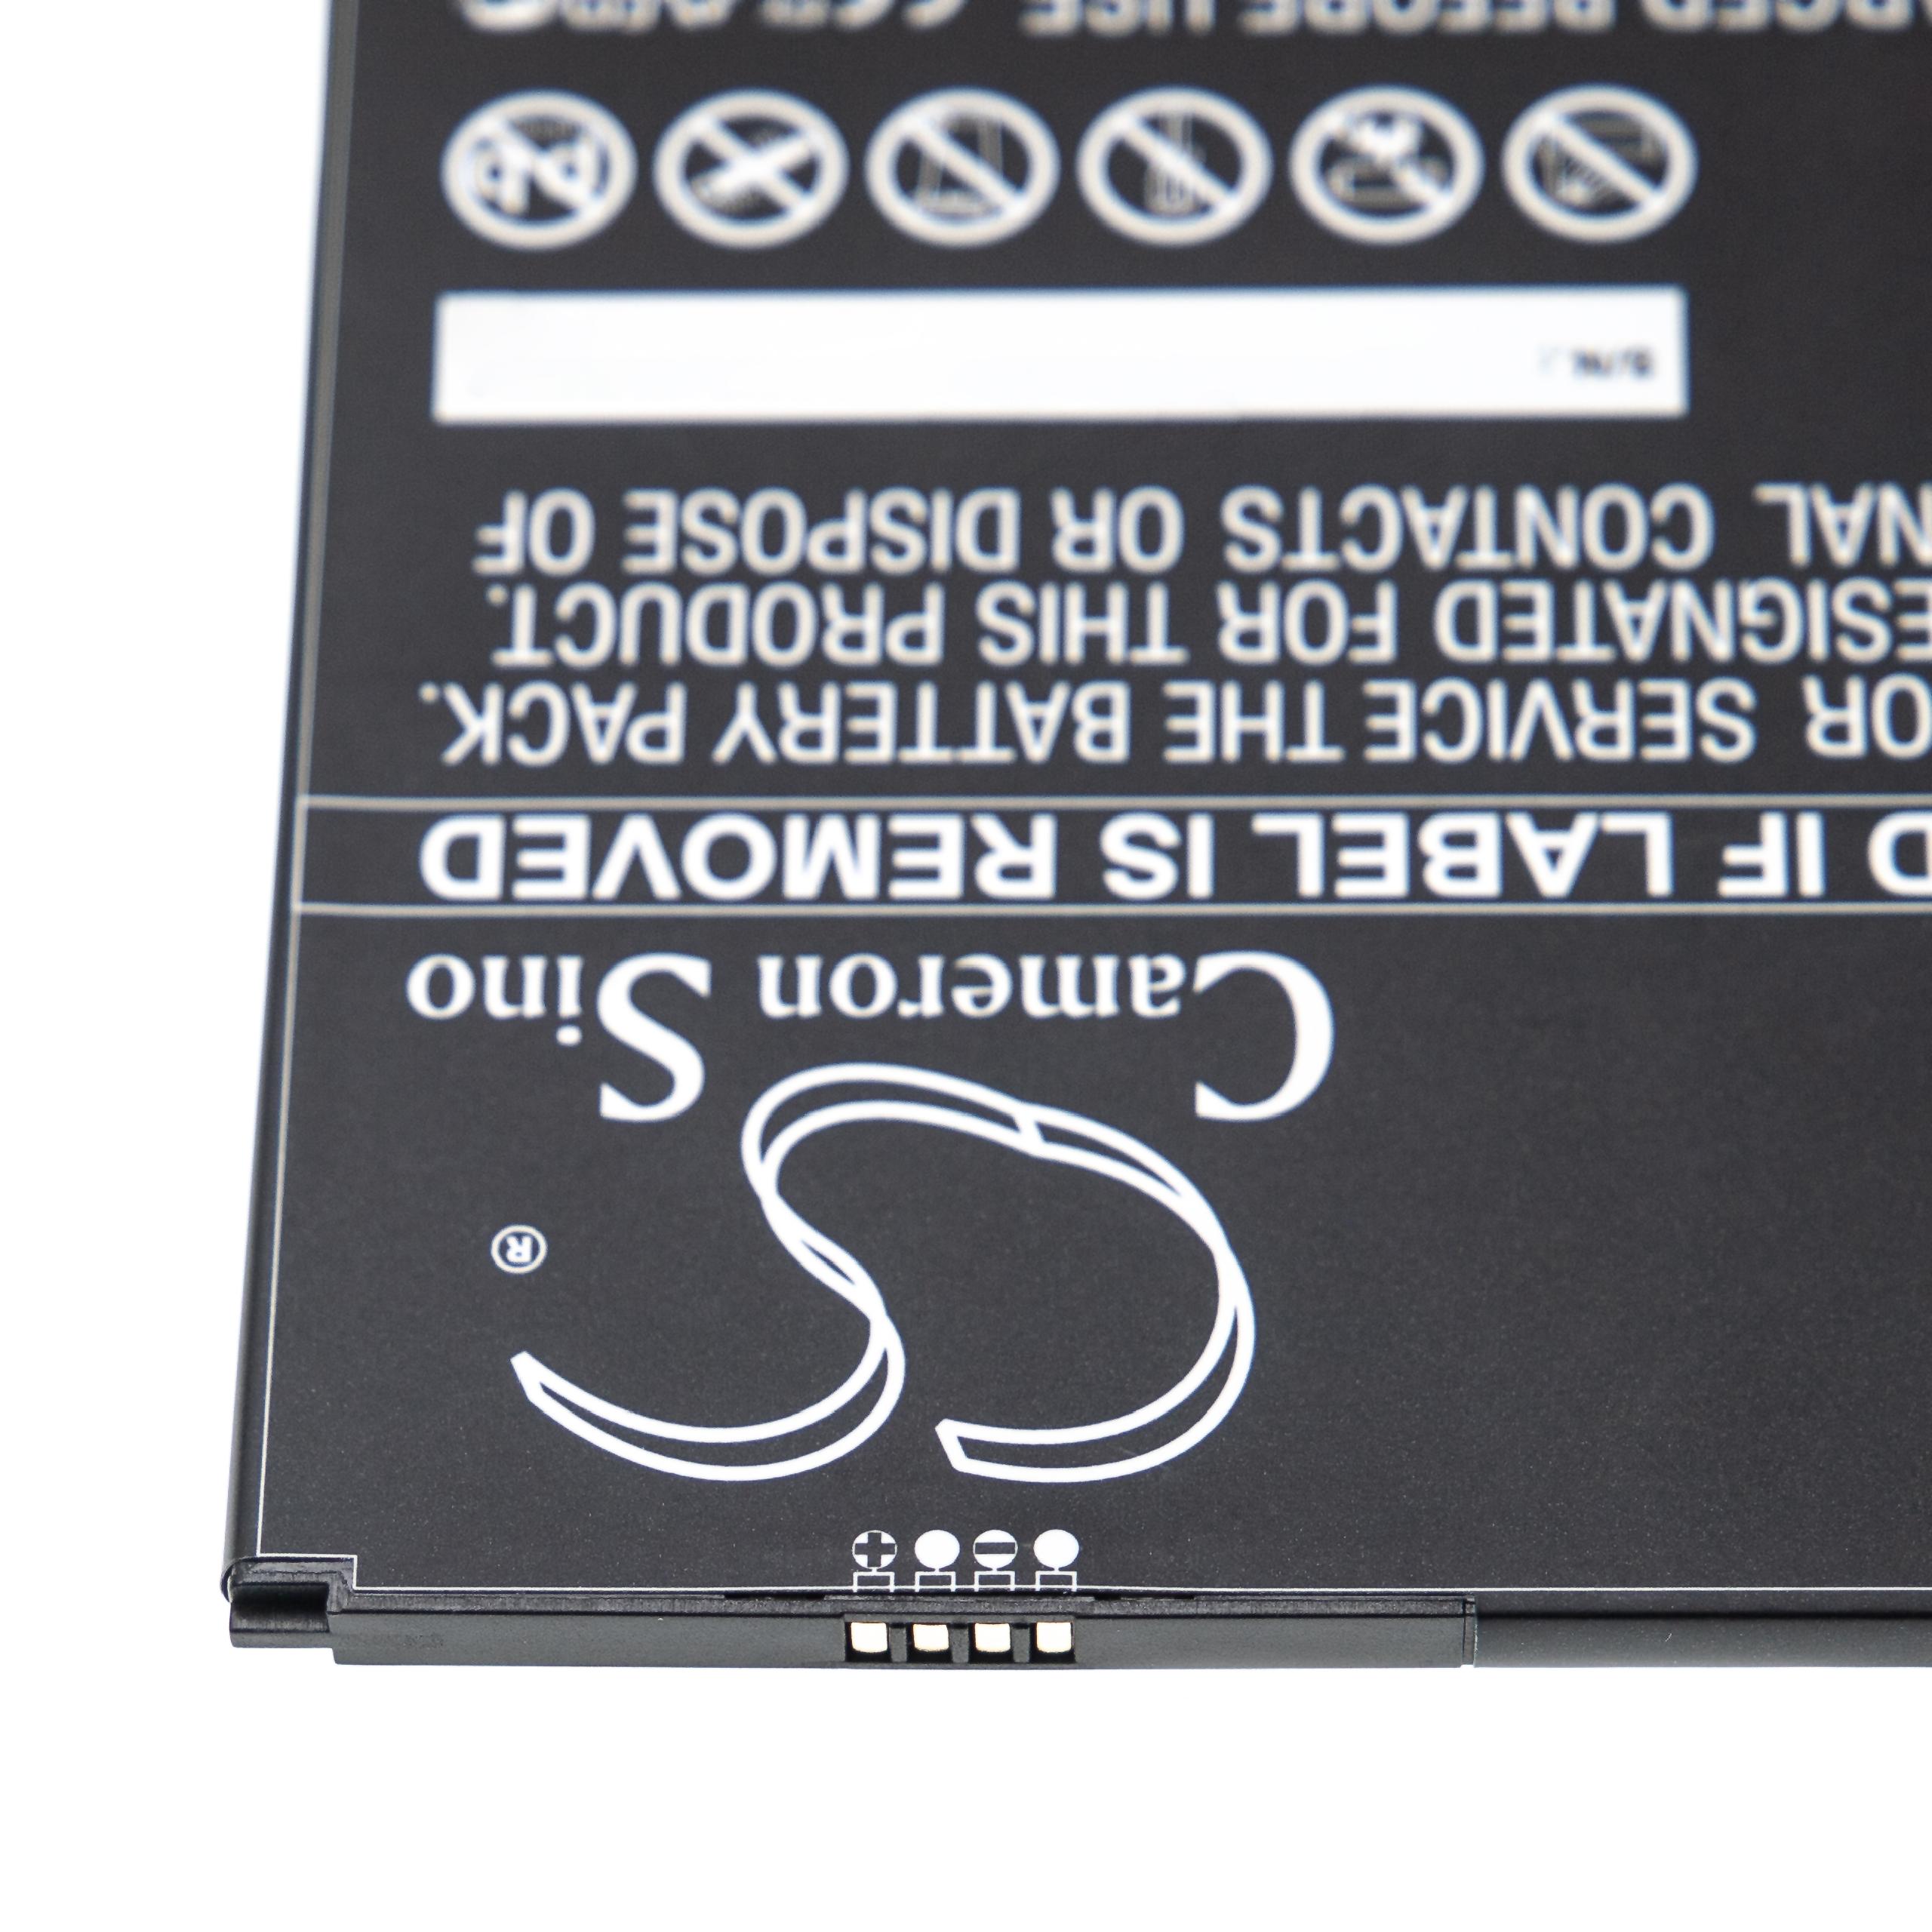 Akumulator zamiennik Samsung EB-BT545ABY - 8800 mAh 3,85 V LiPo